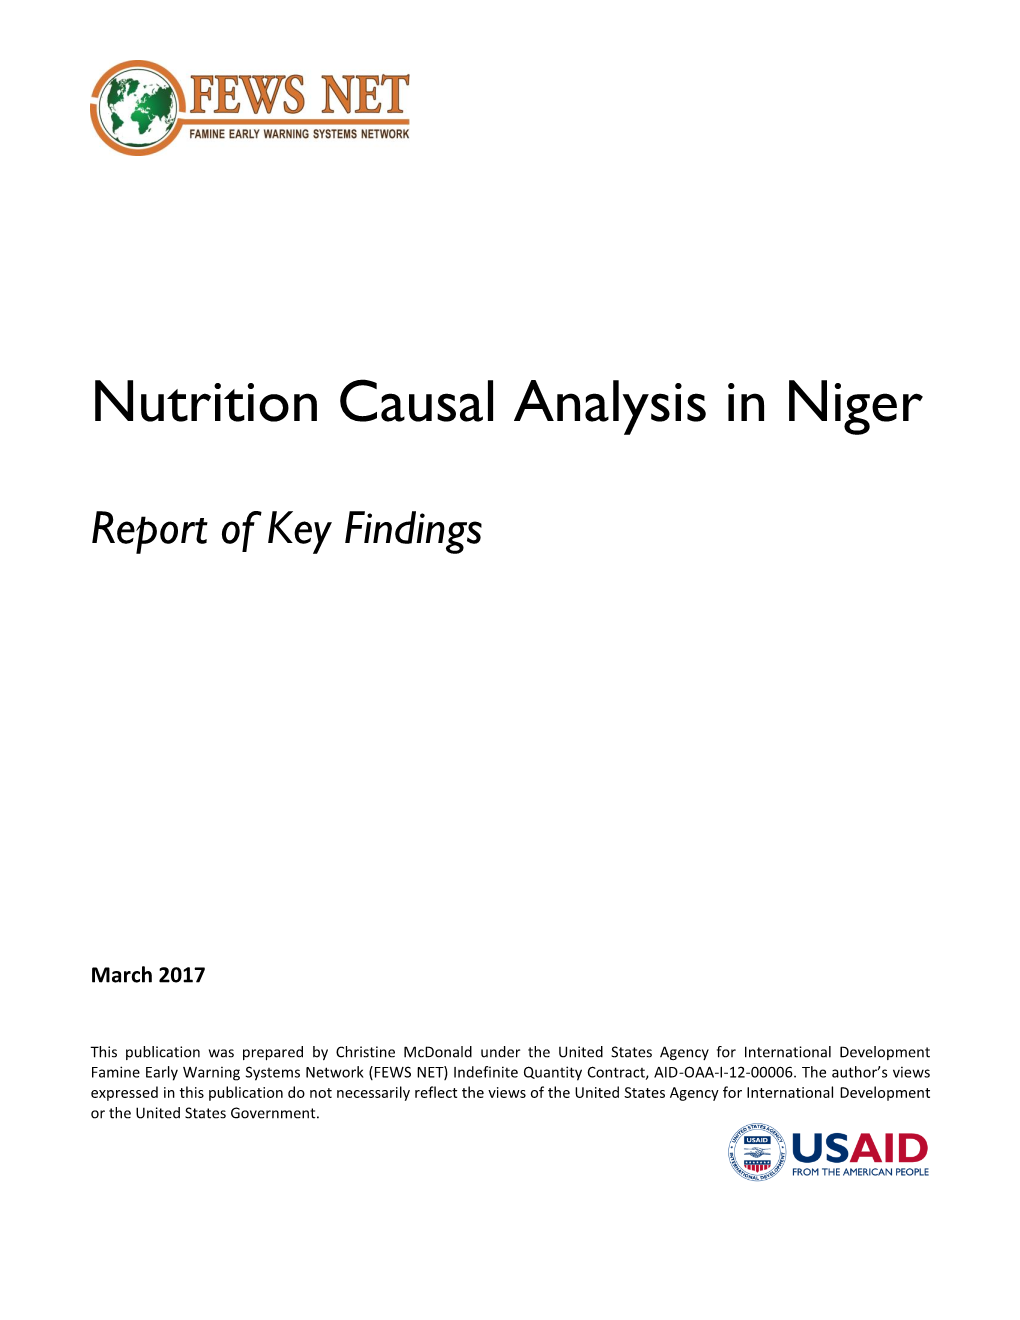 FEWS NET Nutrition Causal Analysis in Nigher Report of Key Findings